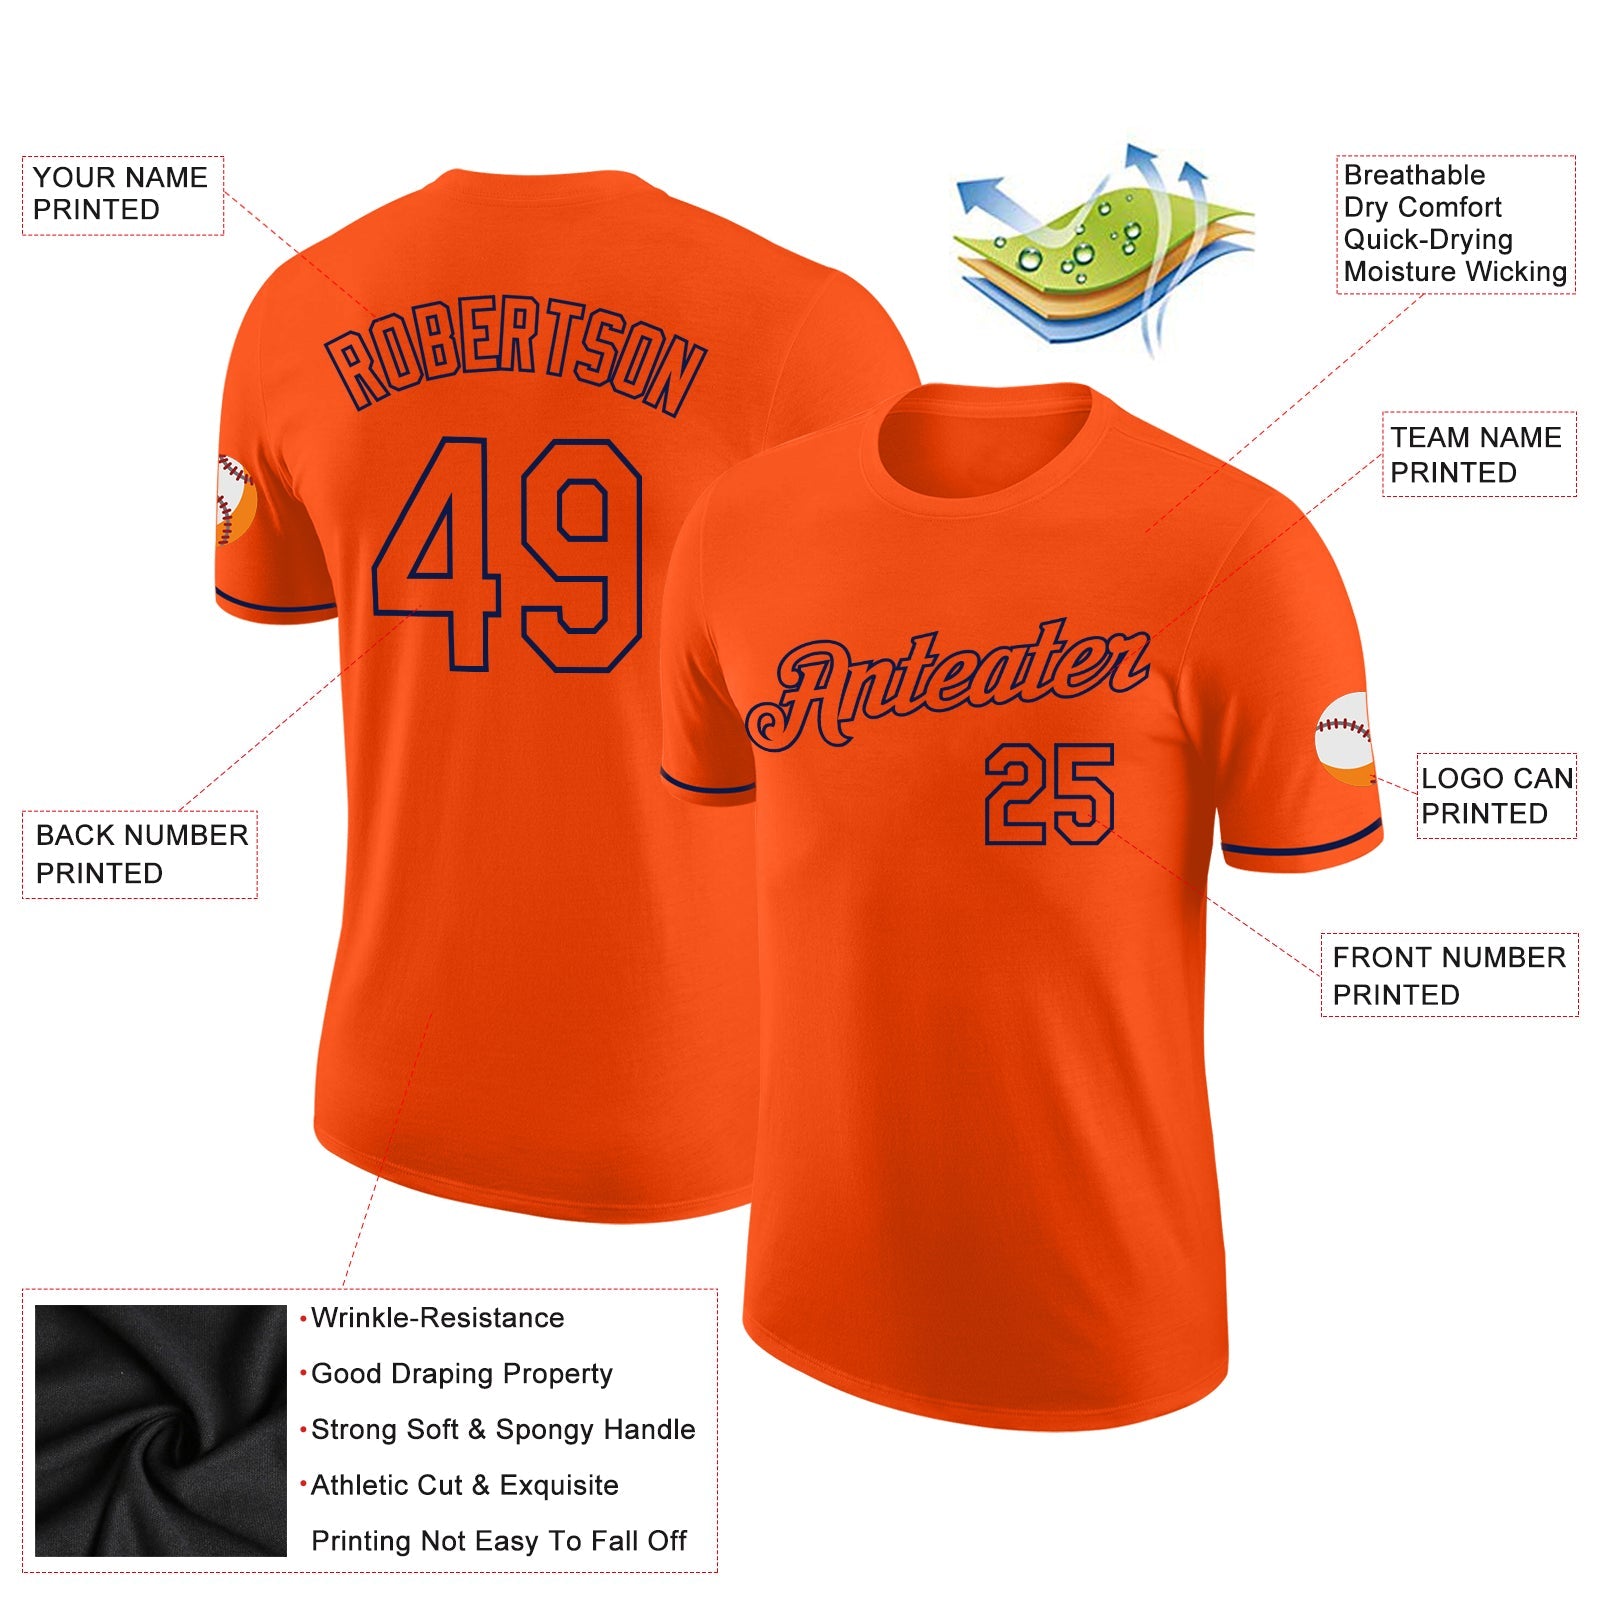 Custom Orange Orange-Navy Performance T-Shirt